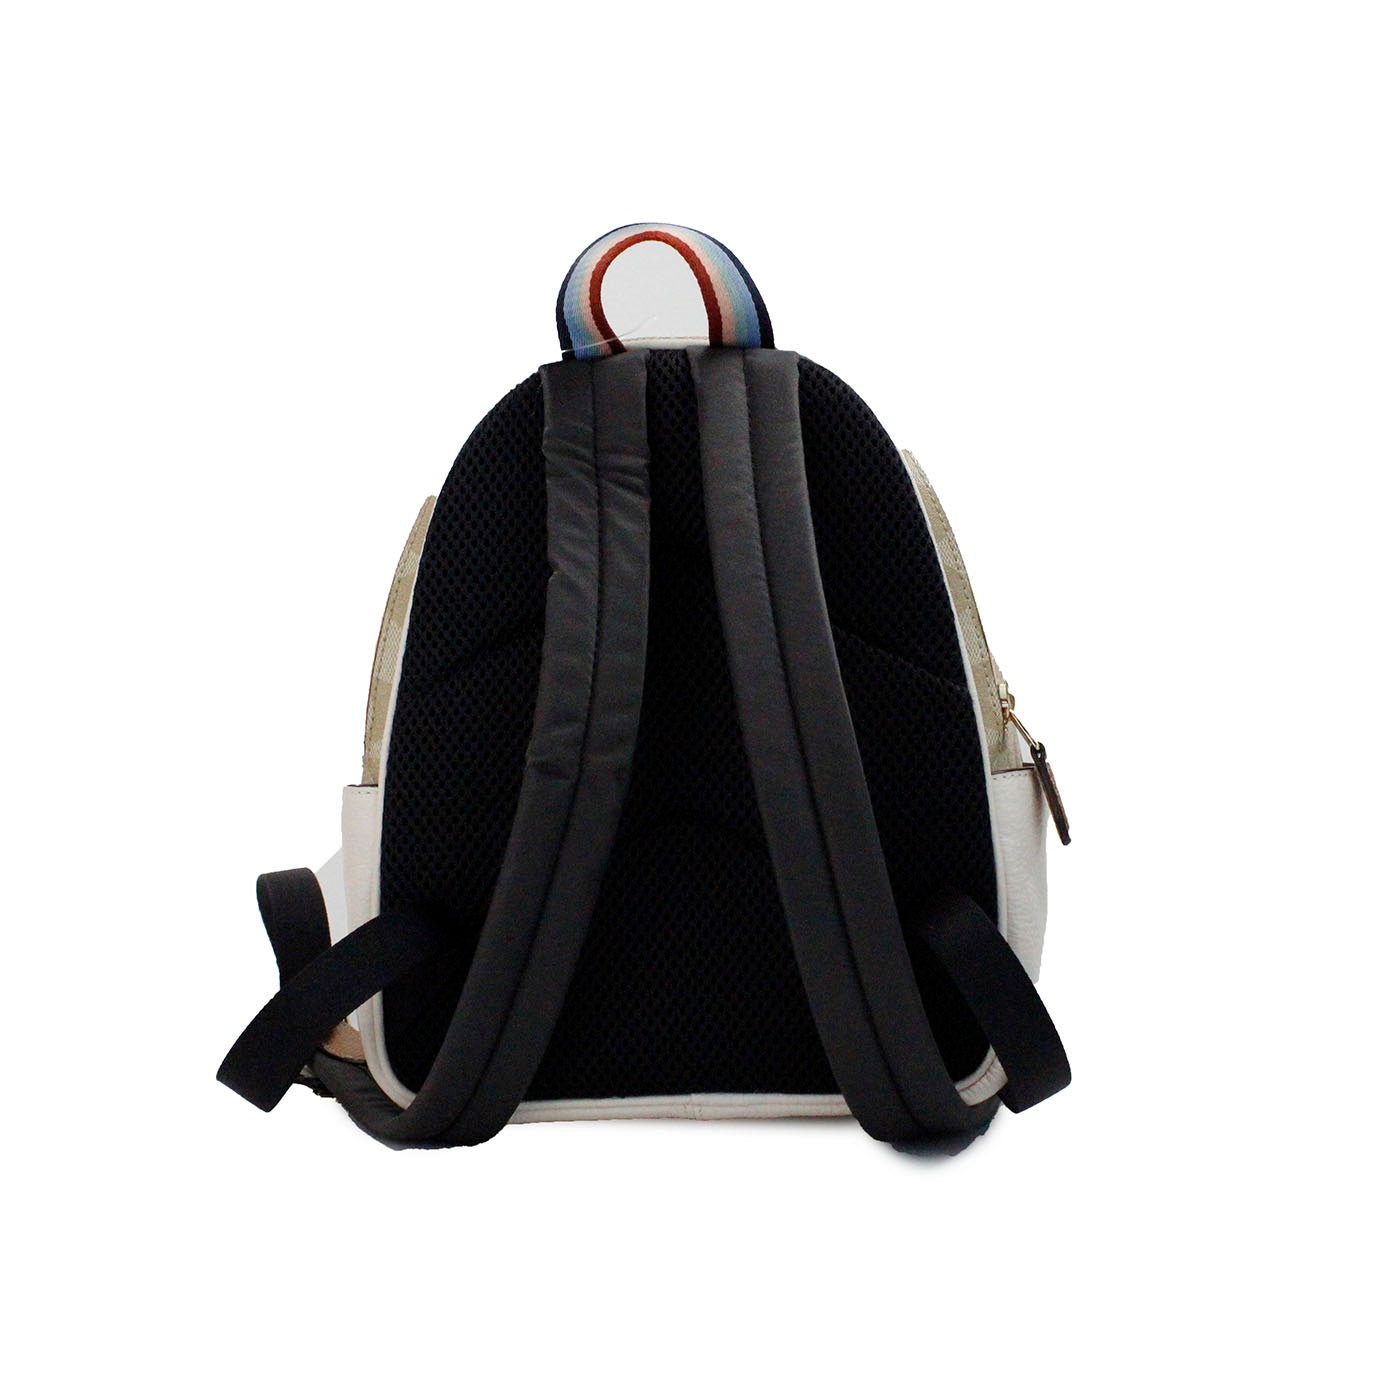 Mini Court Signature Pear Motif Shoulder Backpack Bookbag Bag Chalk Taffy